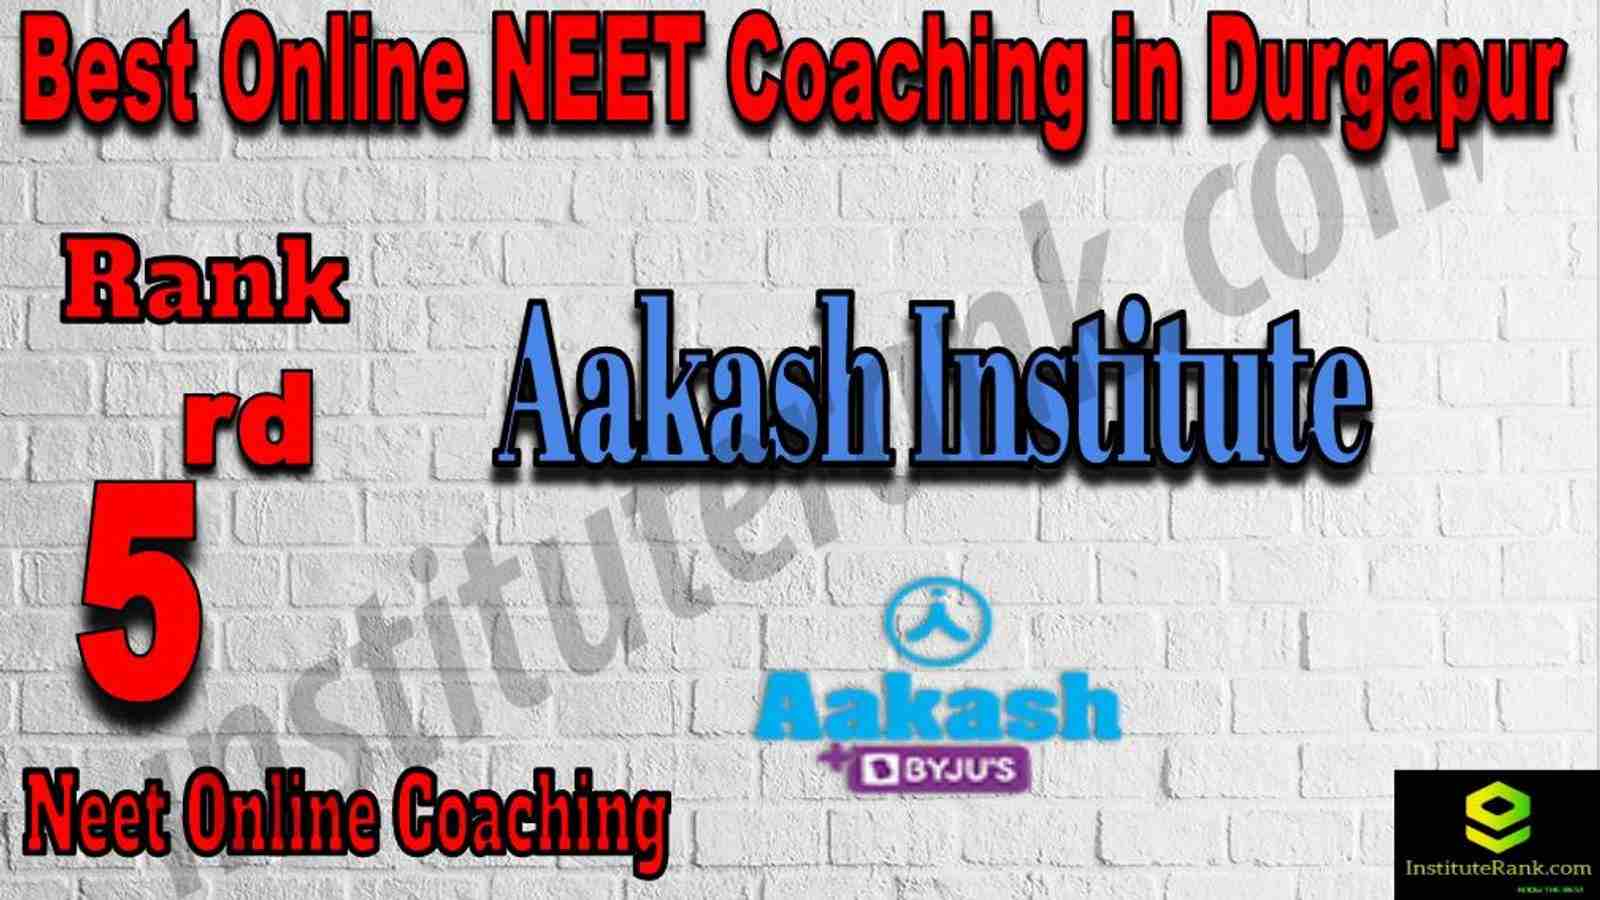 5th Best Online Neet Coaching in Durgapur